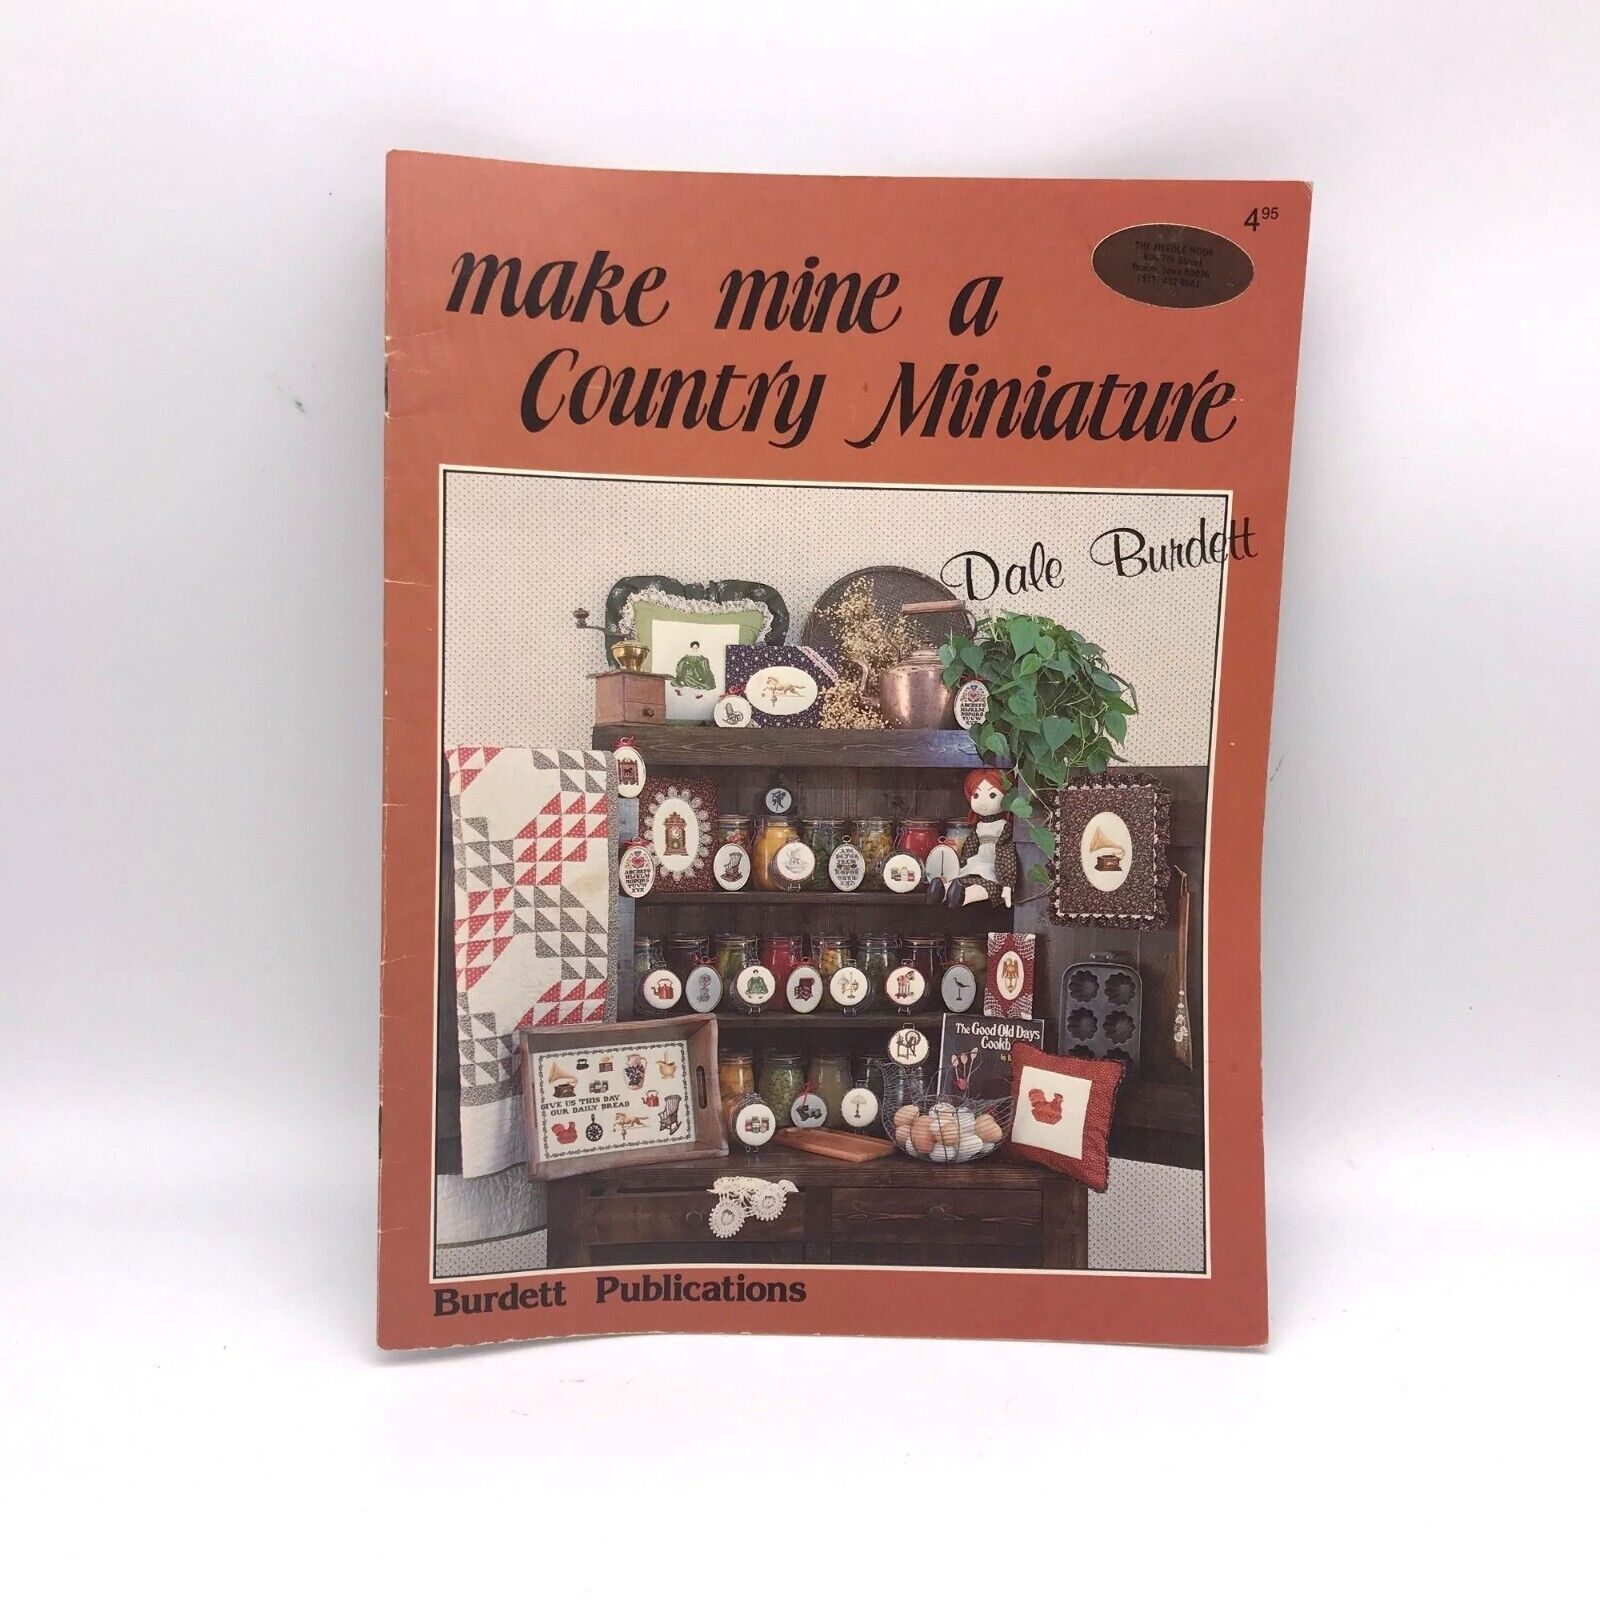 Vintage Cross Stitch Patterns, Make Mine a Country Miniature by Dale Burdett - $12.60